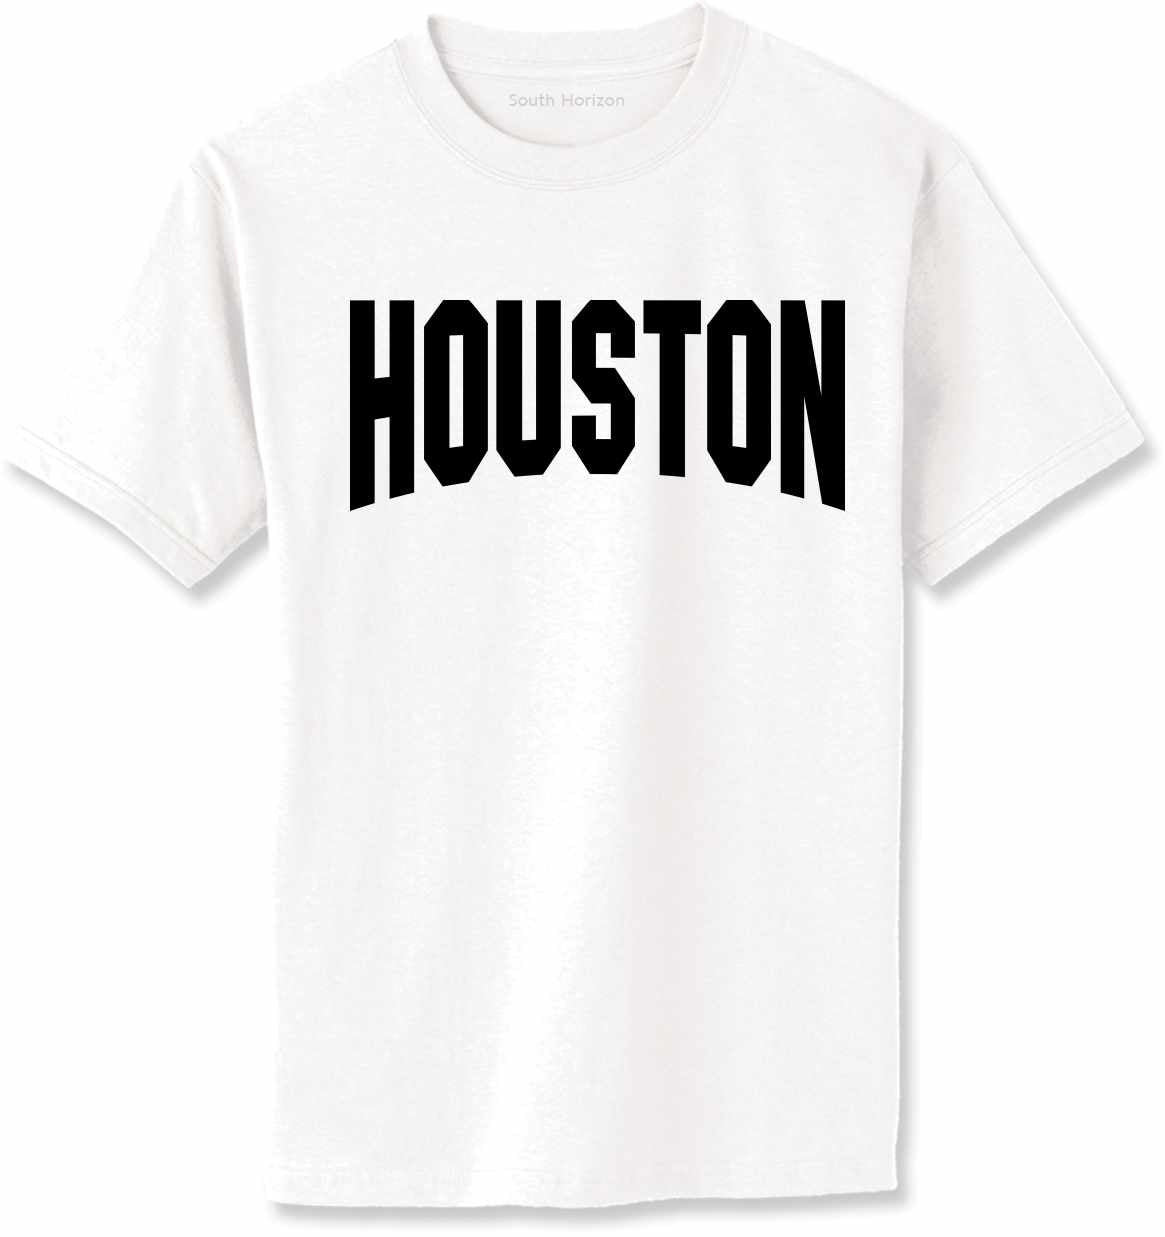 HOUSTON on Adult T-Shirt